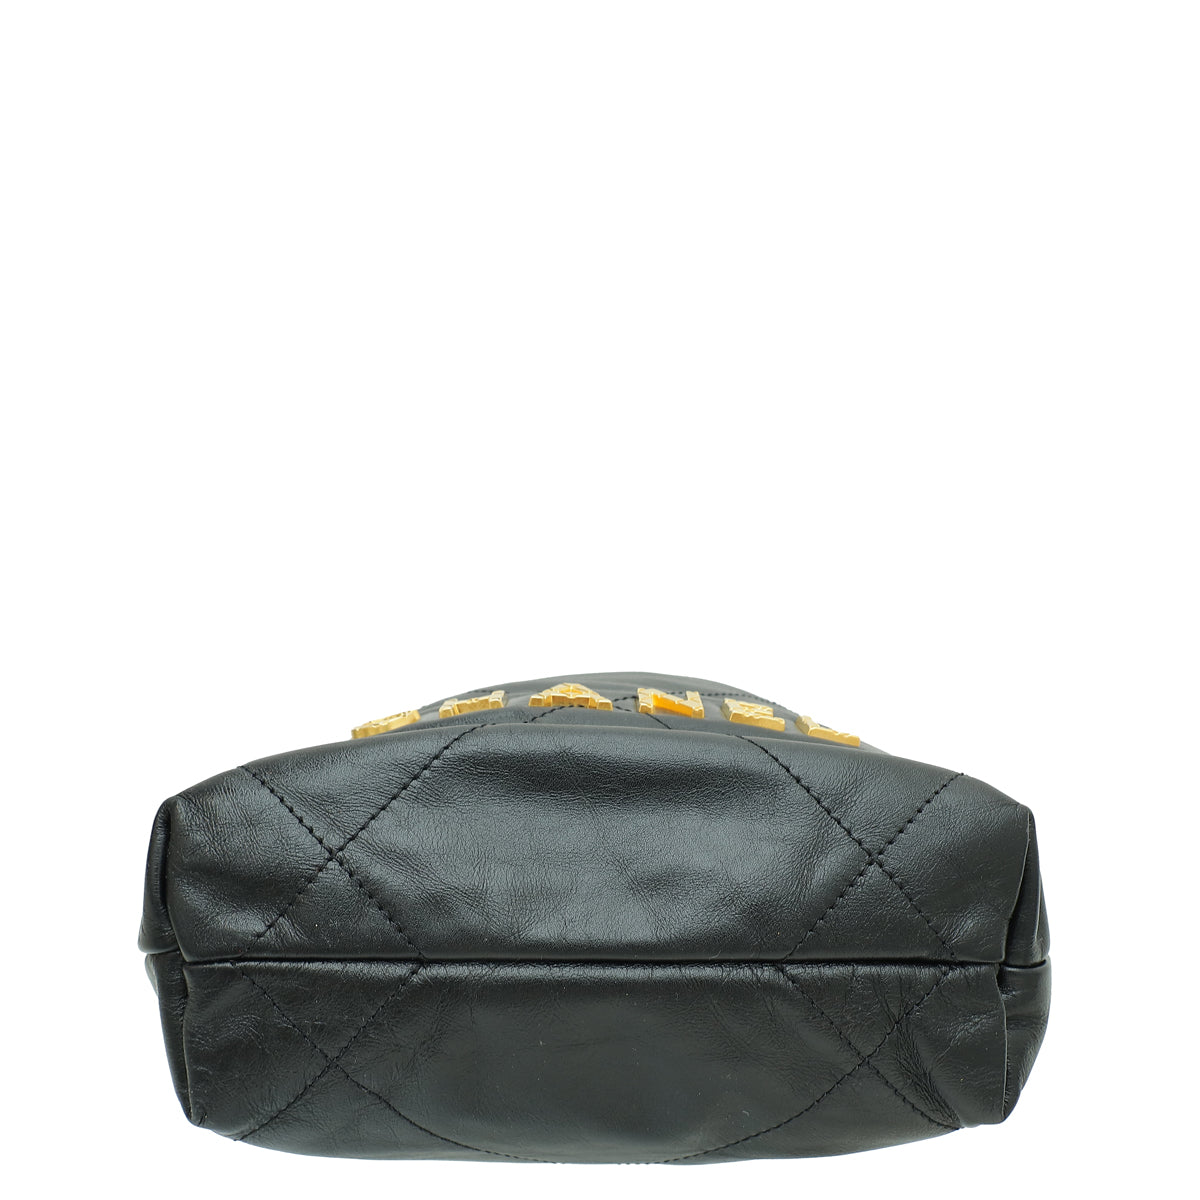 Chanel Black 22 Mini Metallic Calfskin Bag